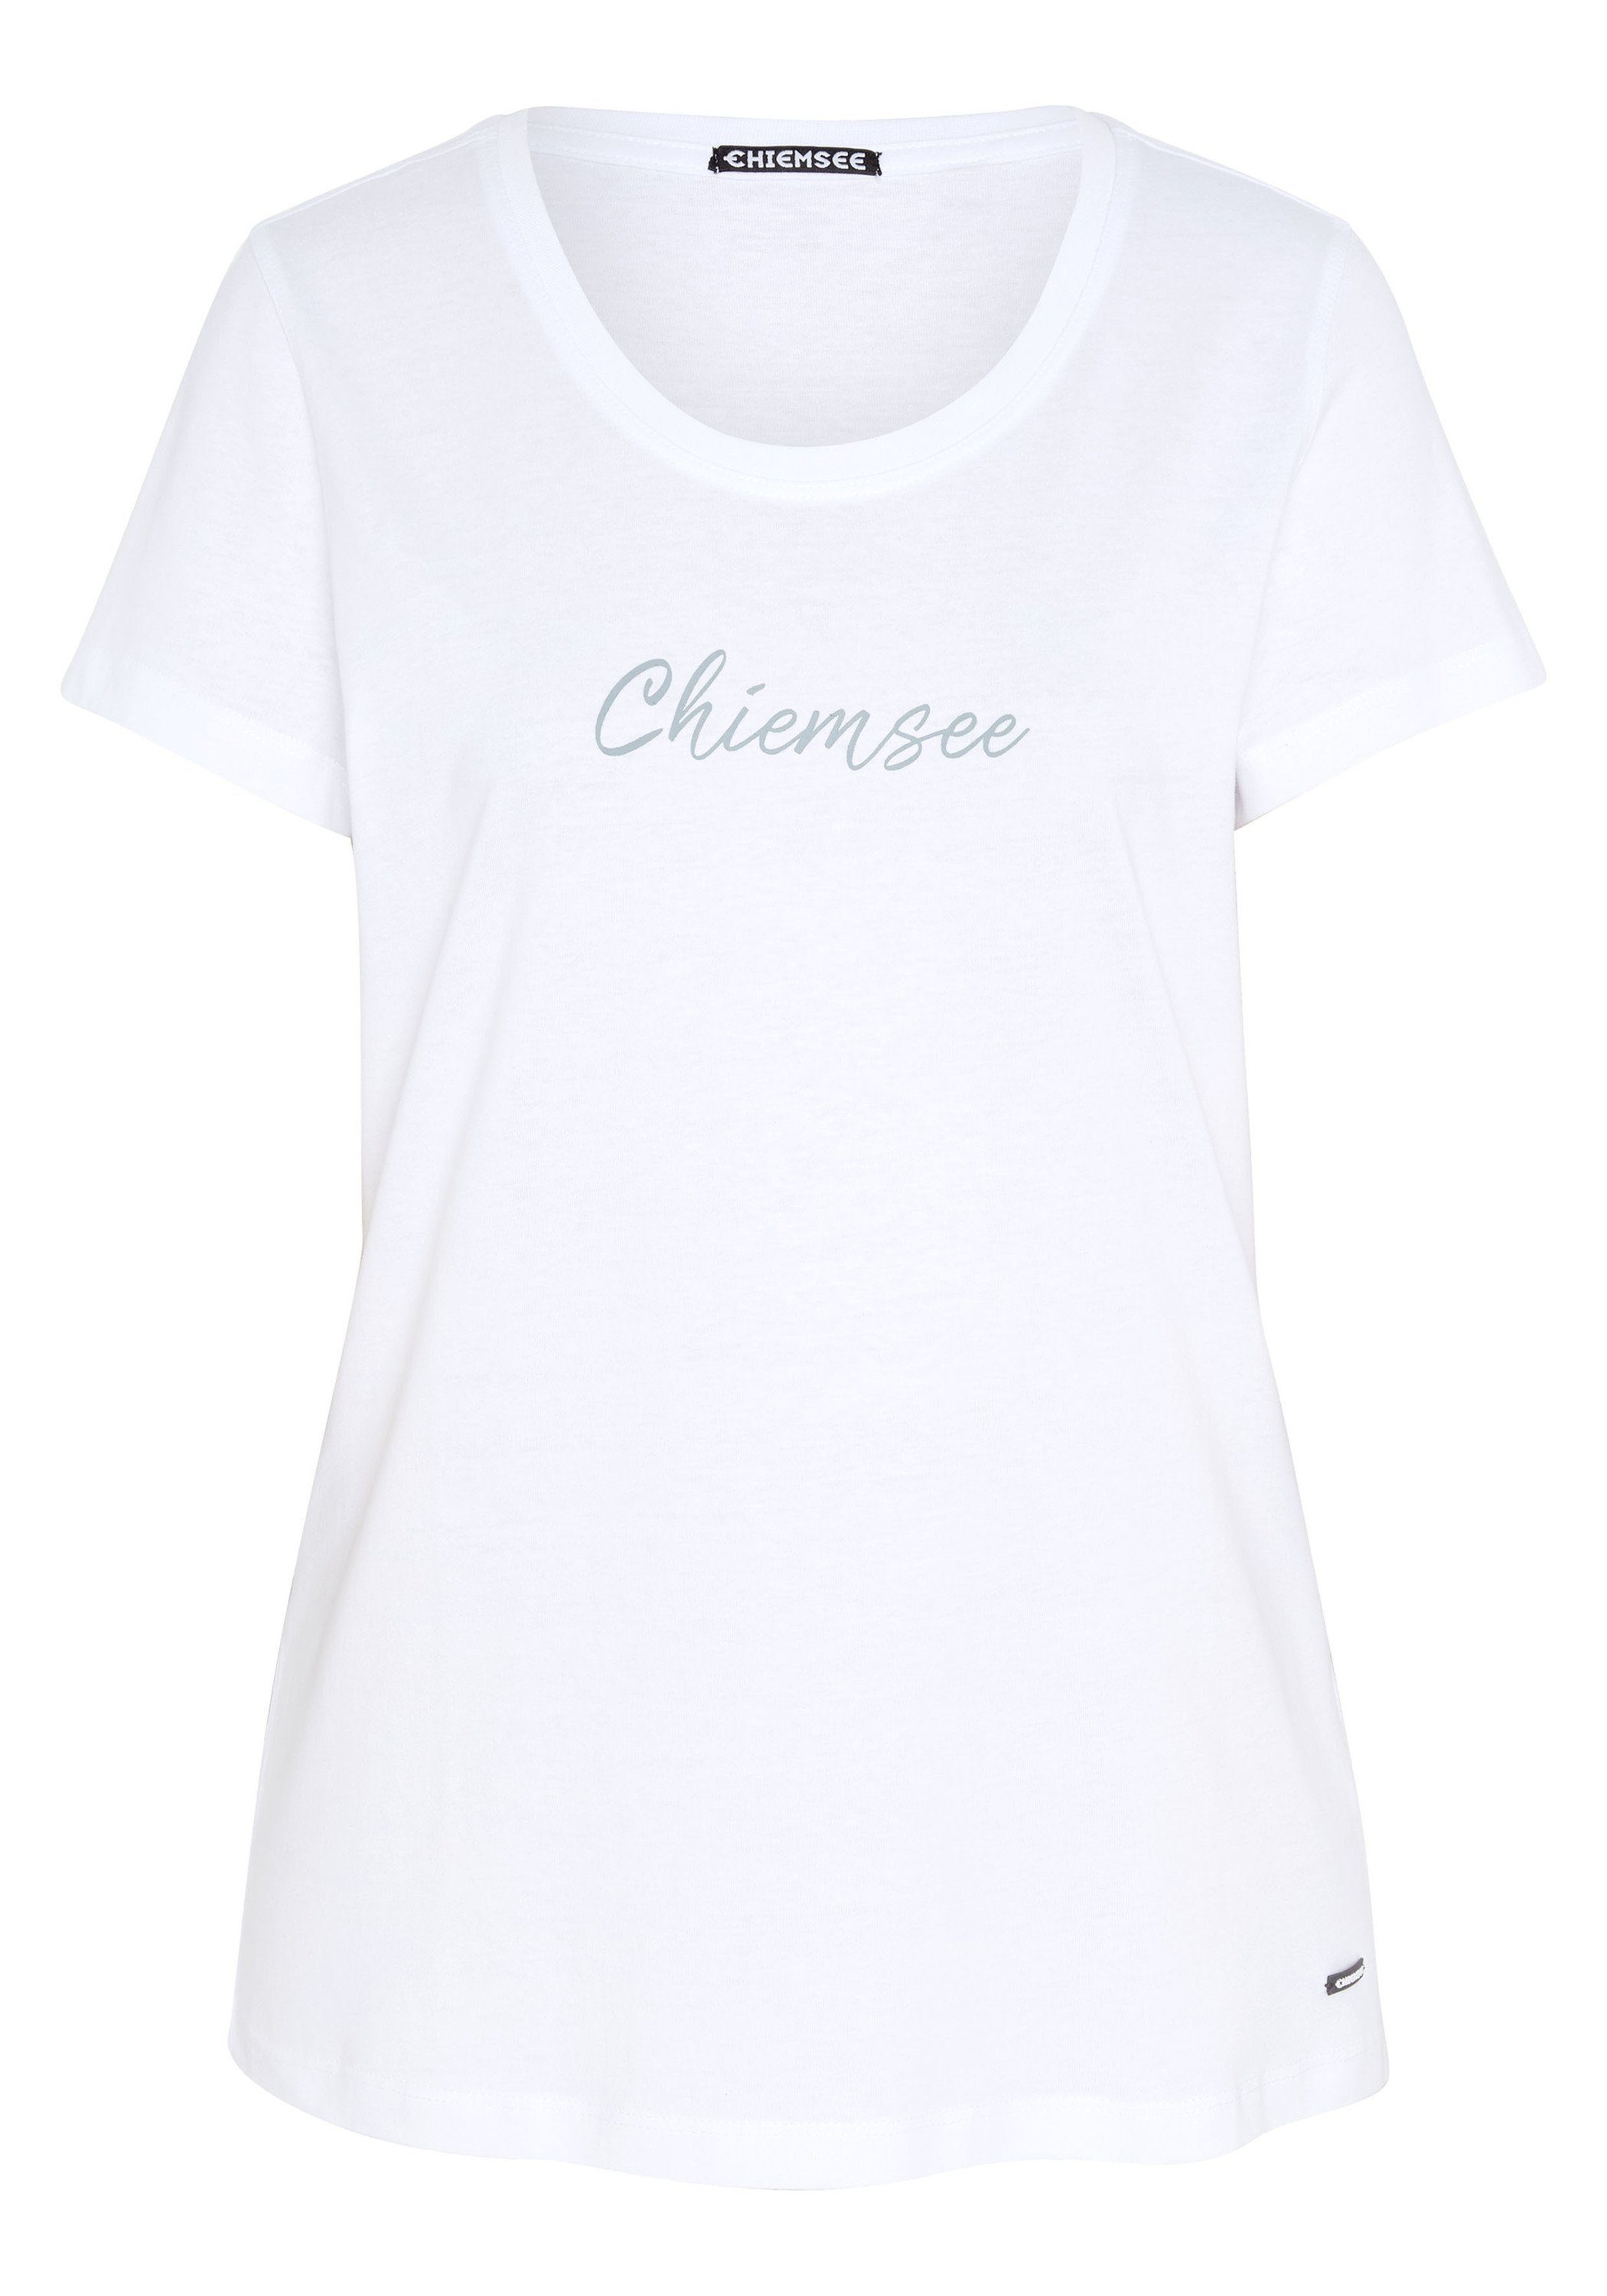 im Print-Shirt White Label-Look 11-0601 T-Shirt Bright 1 Chiemsee